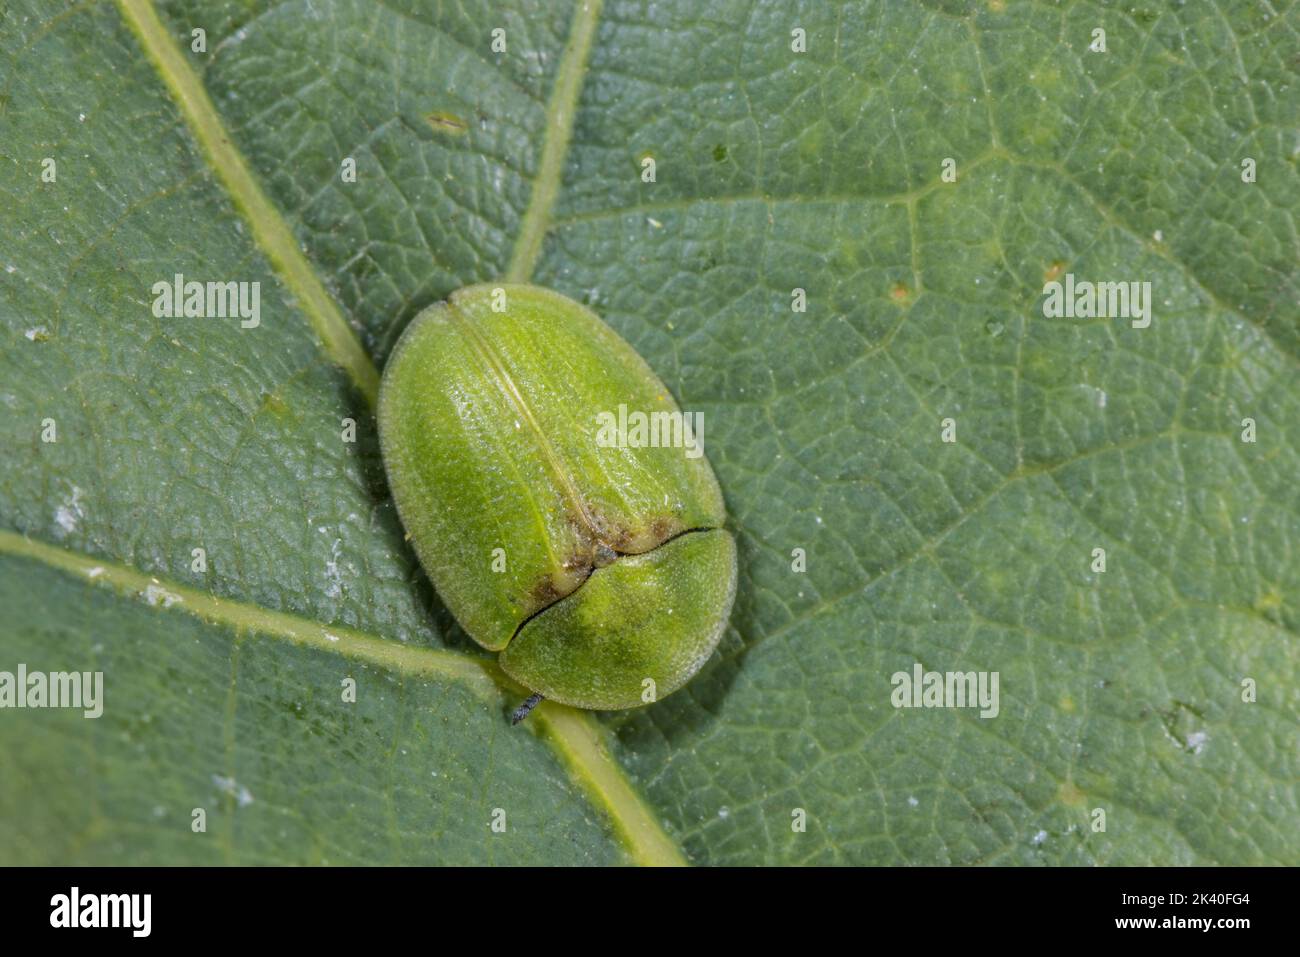 Thistle tortoise beetle (Cassida rubiginosa), sits on a leaf, Germany Stock Photo